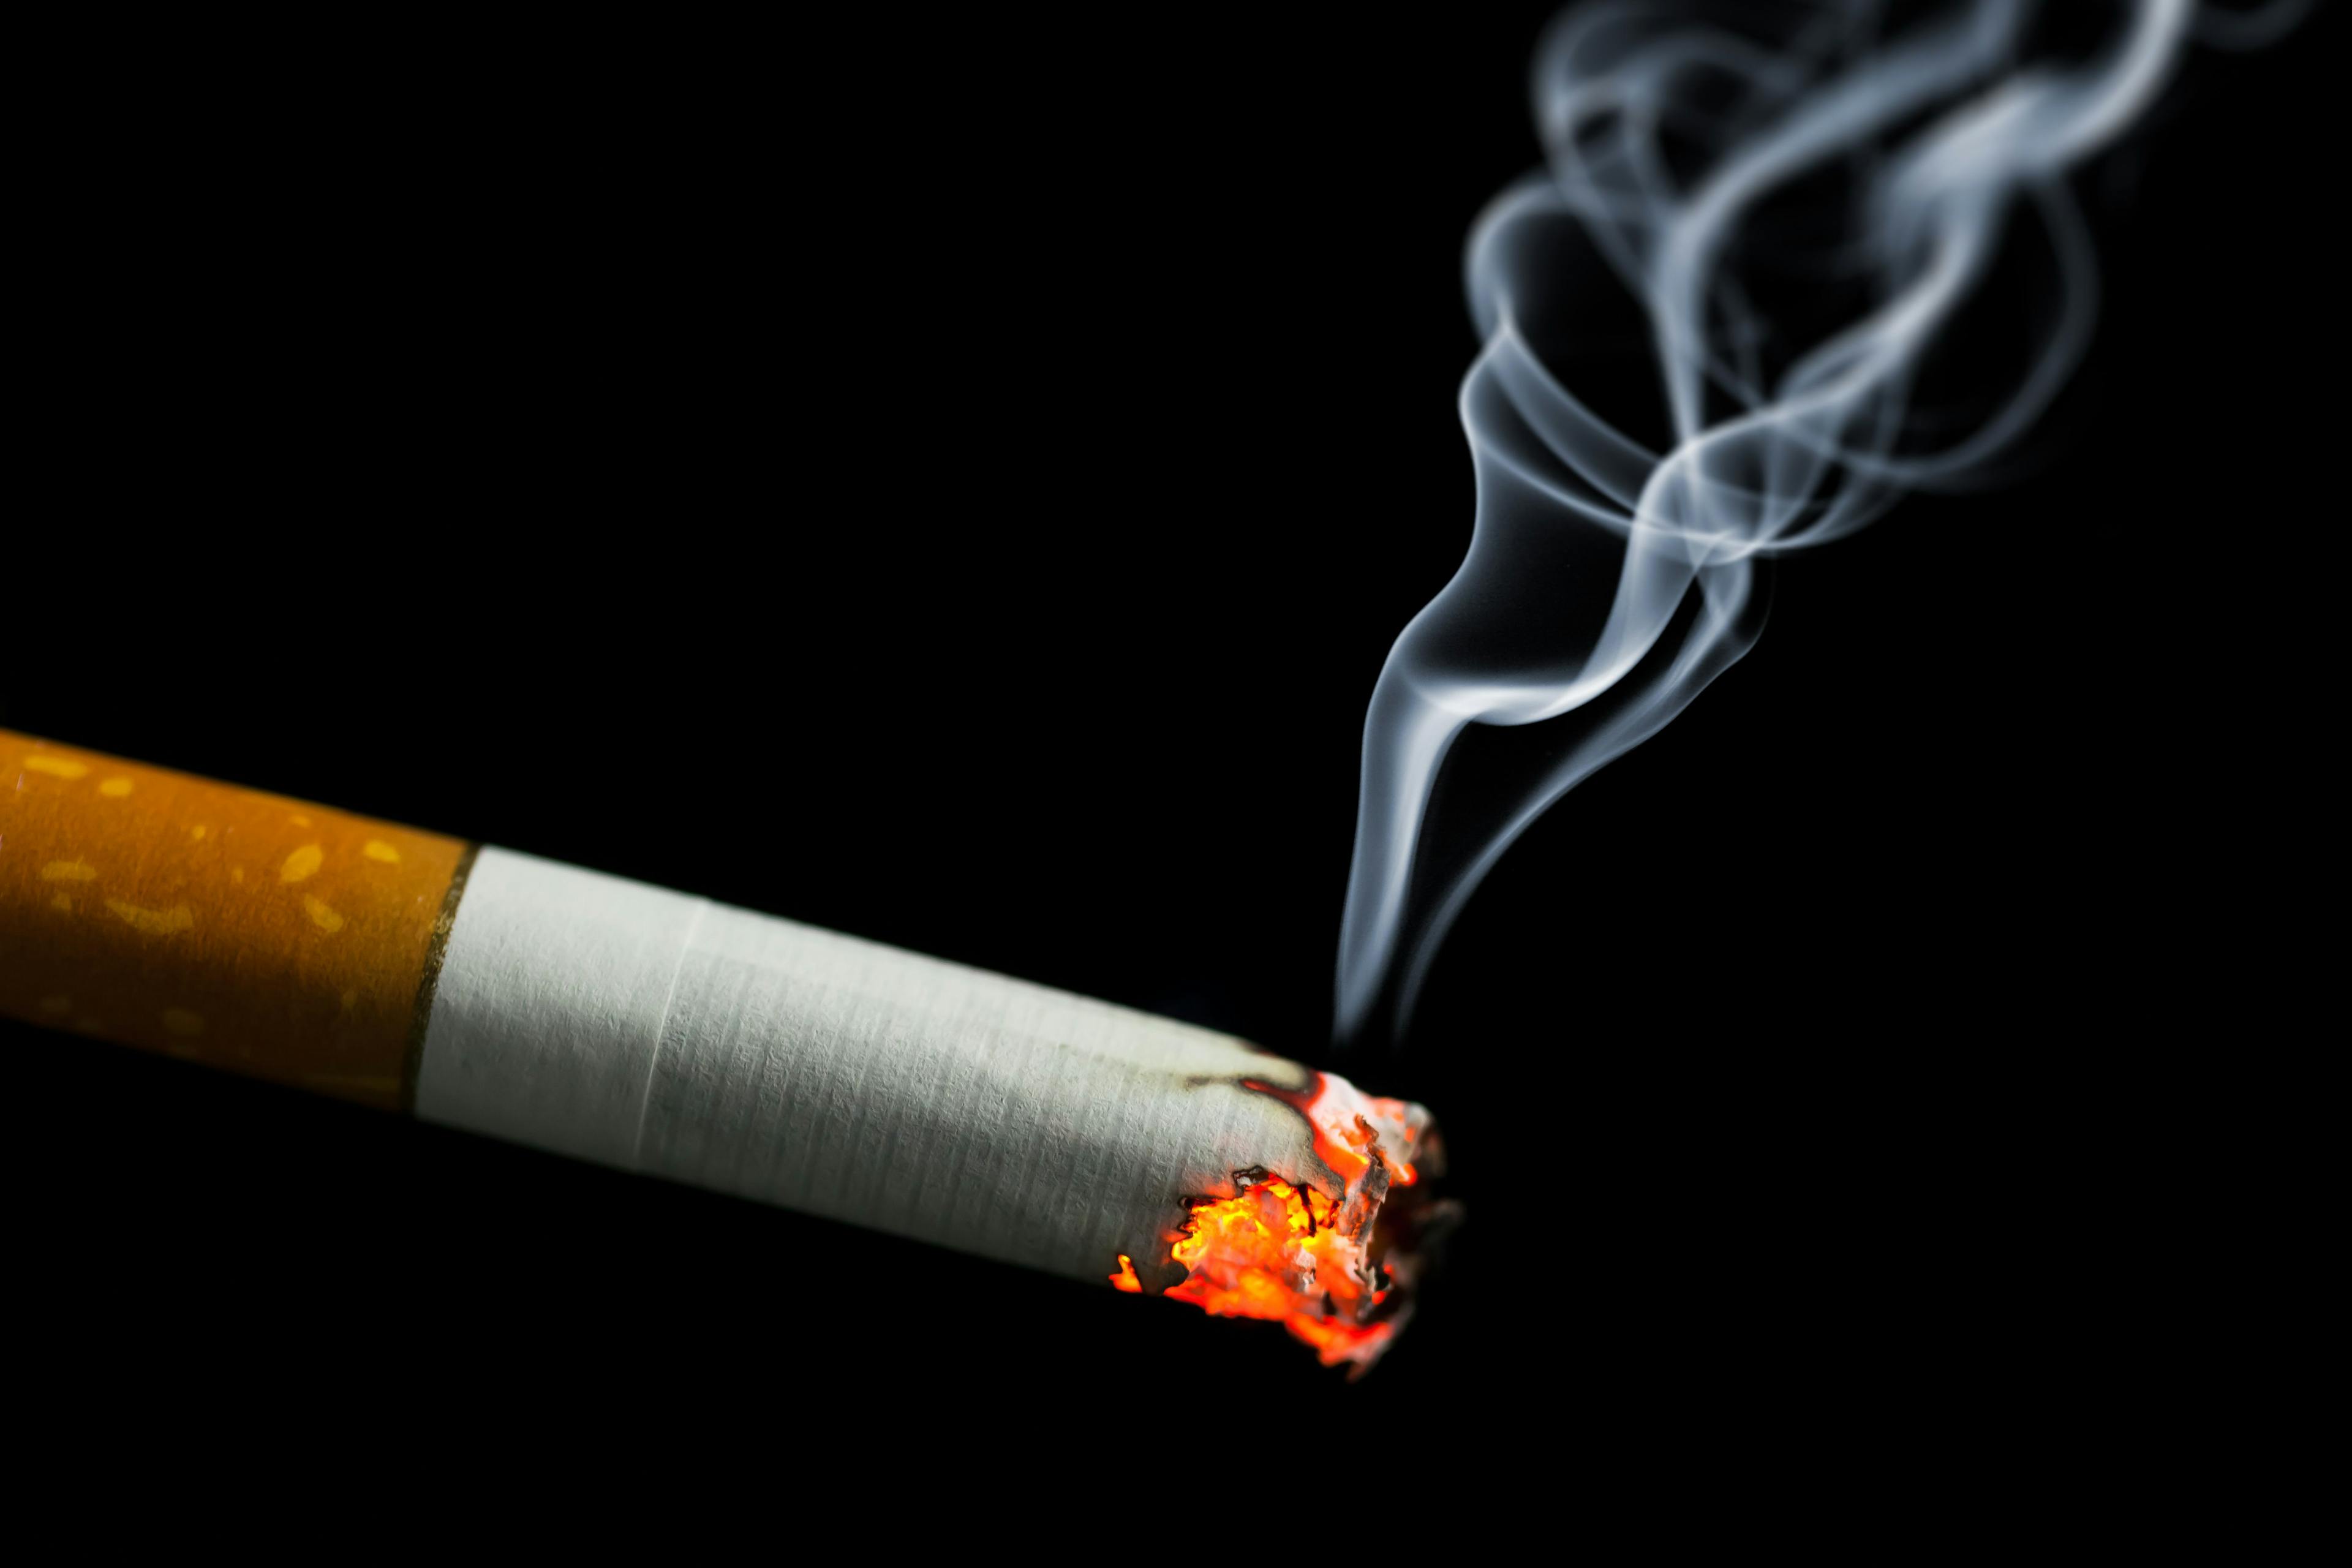 Burning cigarette with smoke - Image credit: nikkytok | stock.adobe.com